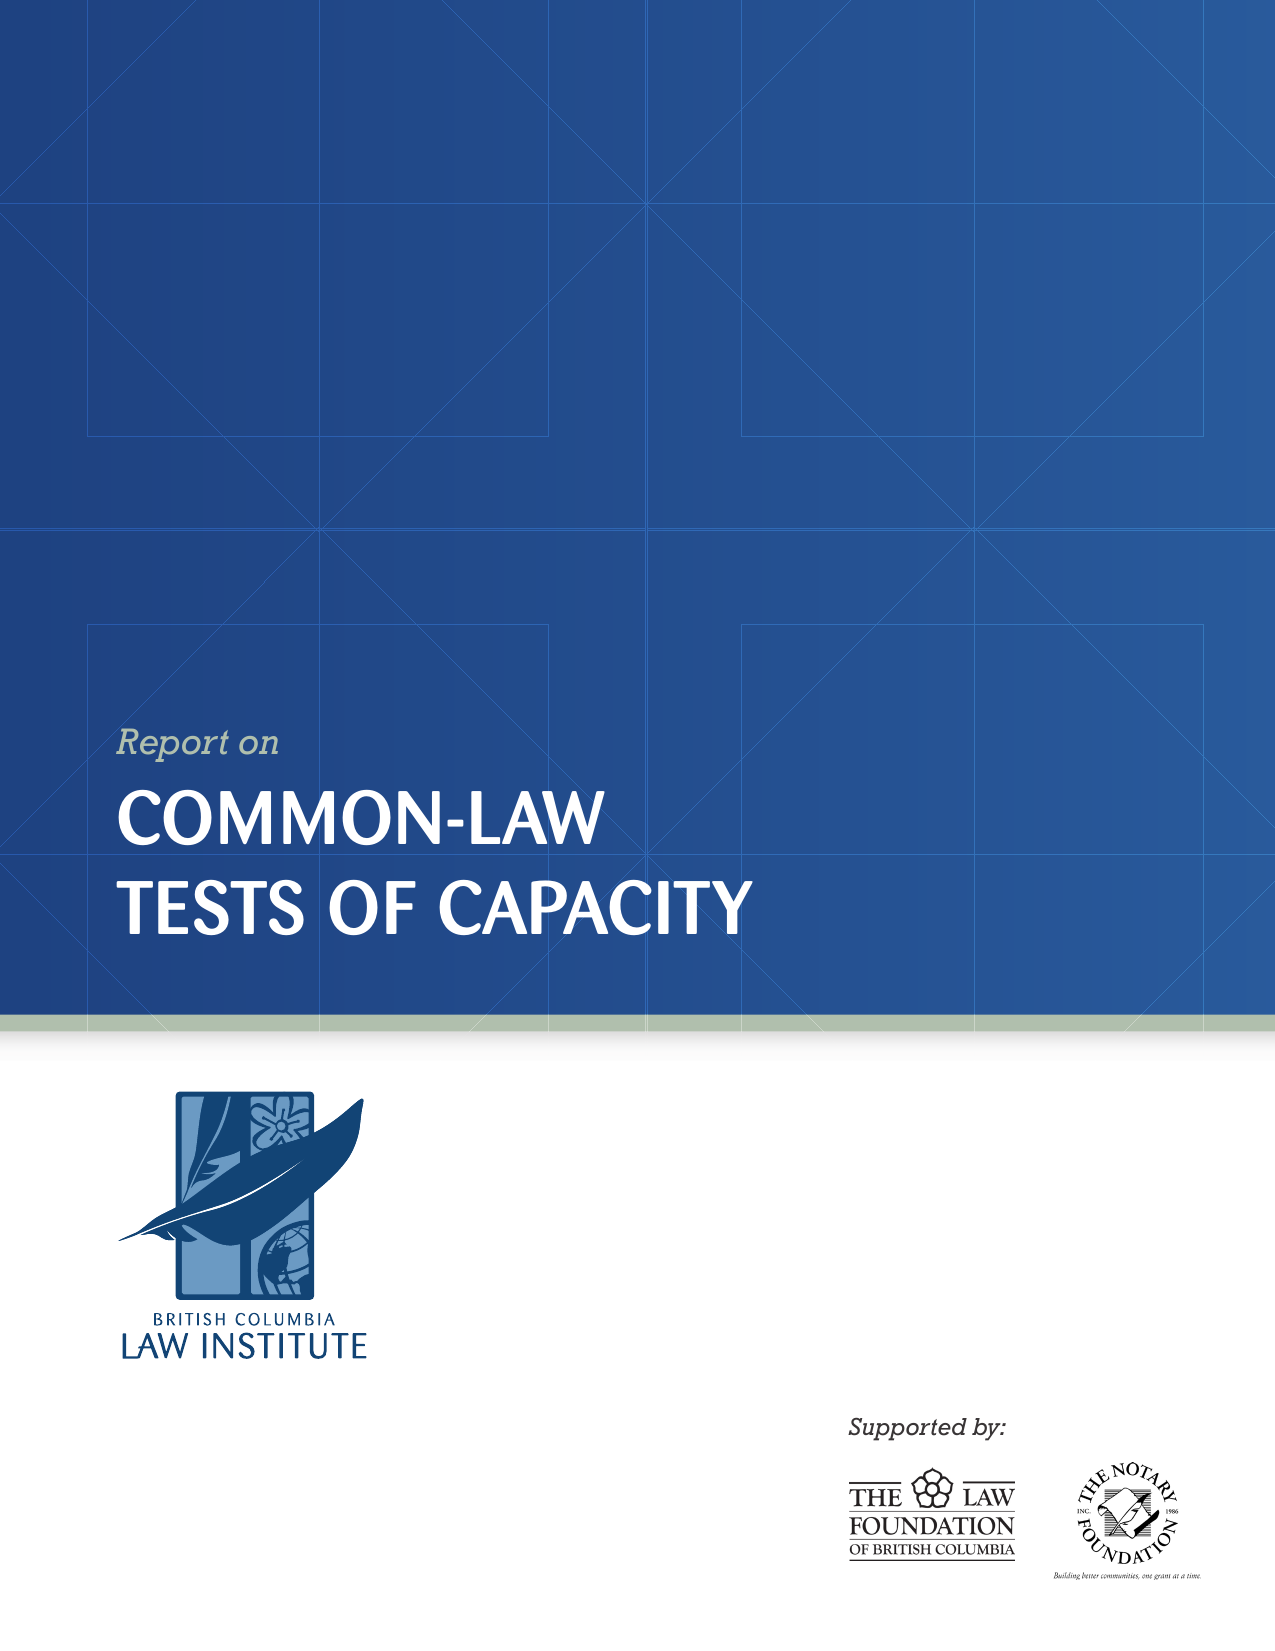 commonlaw tests of capacity British Columbia Law Institute